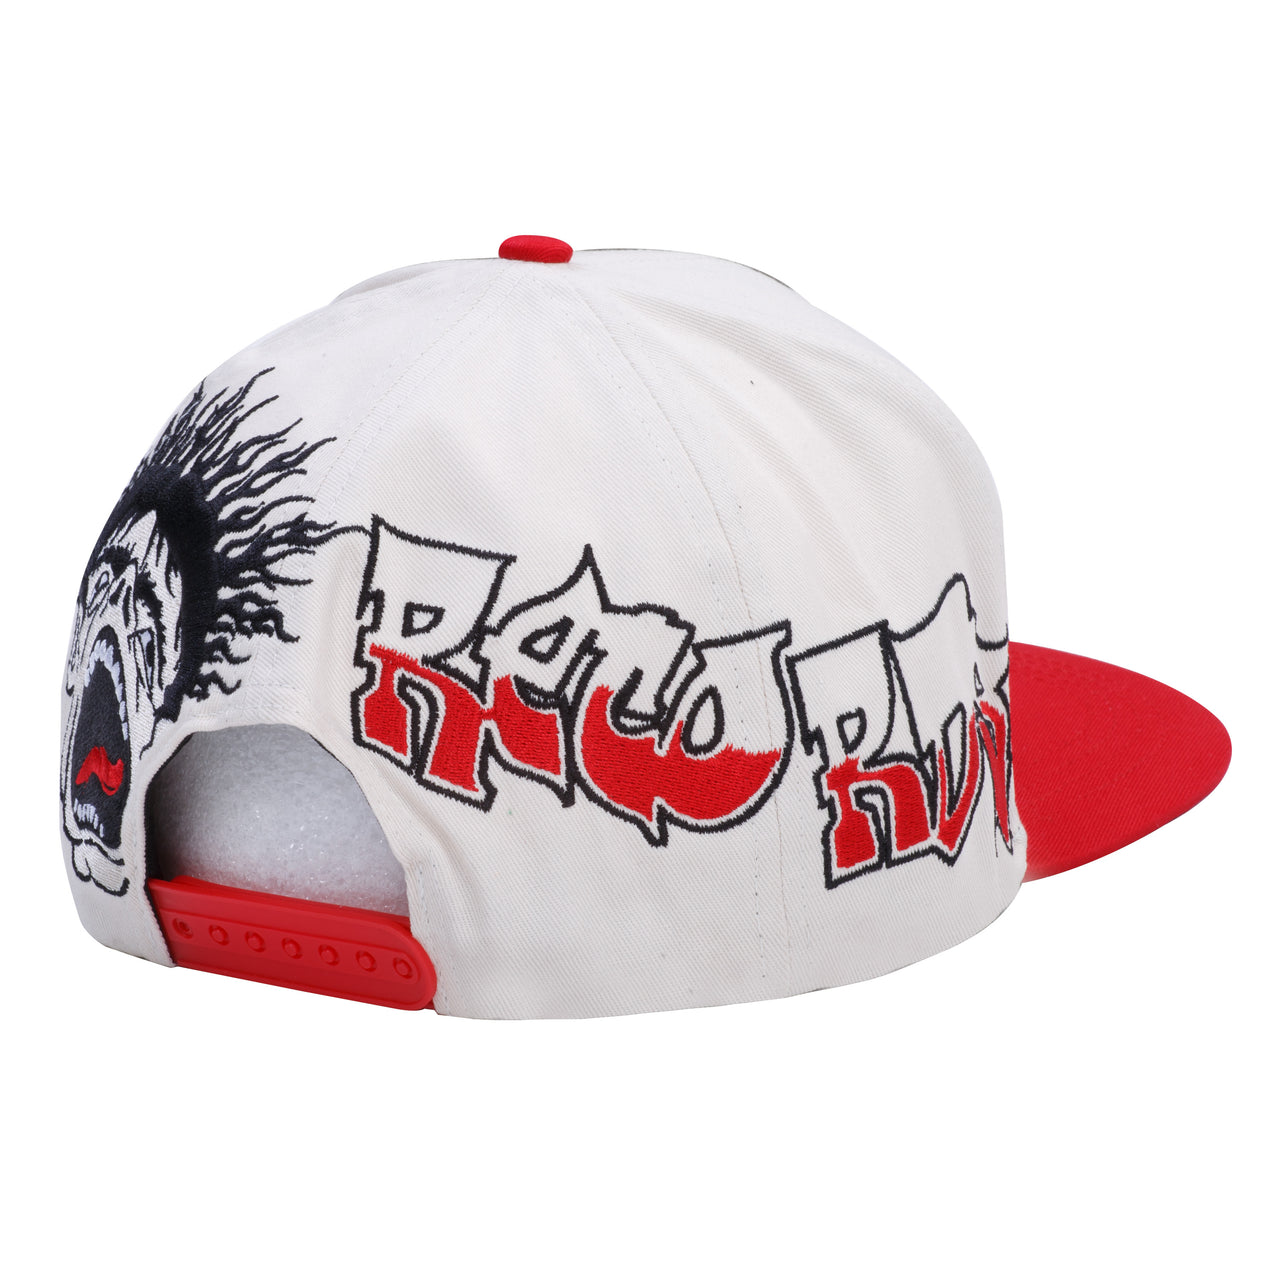 Hellstar Records Snapback Hat White Red